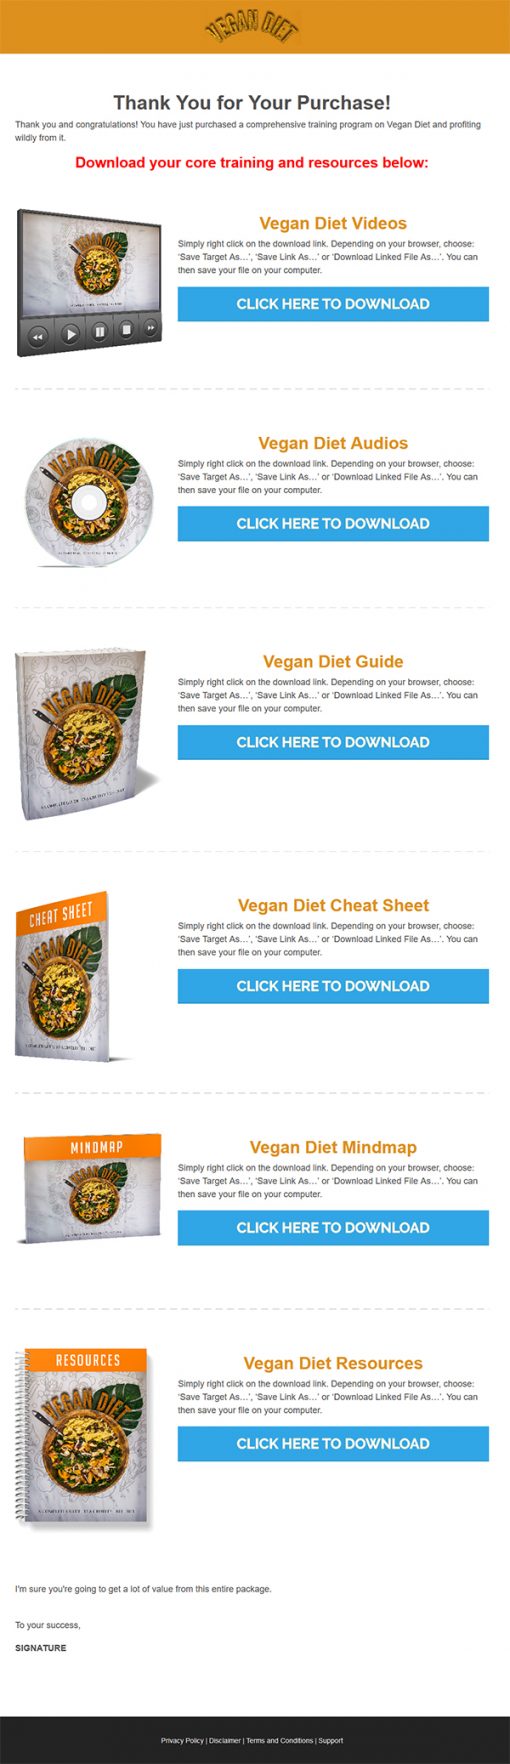 Vegan Diet Ebook and Videos MRR